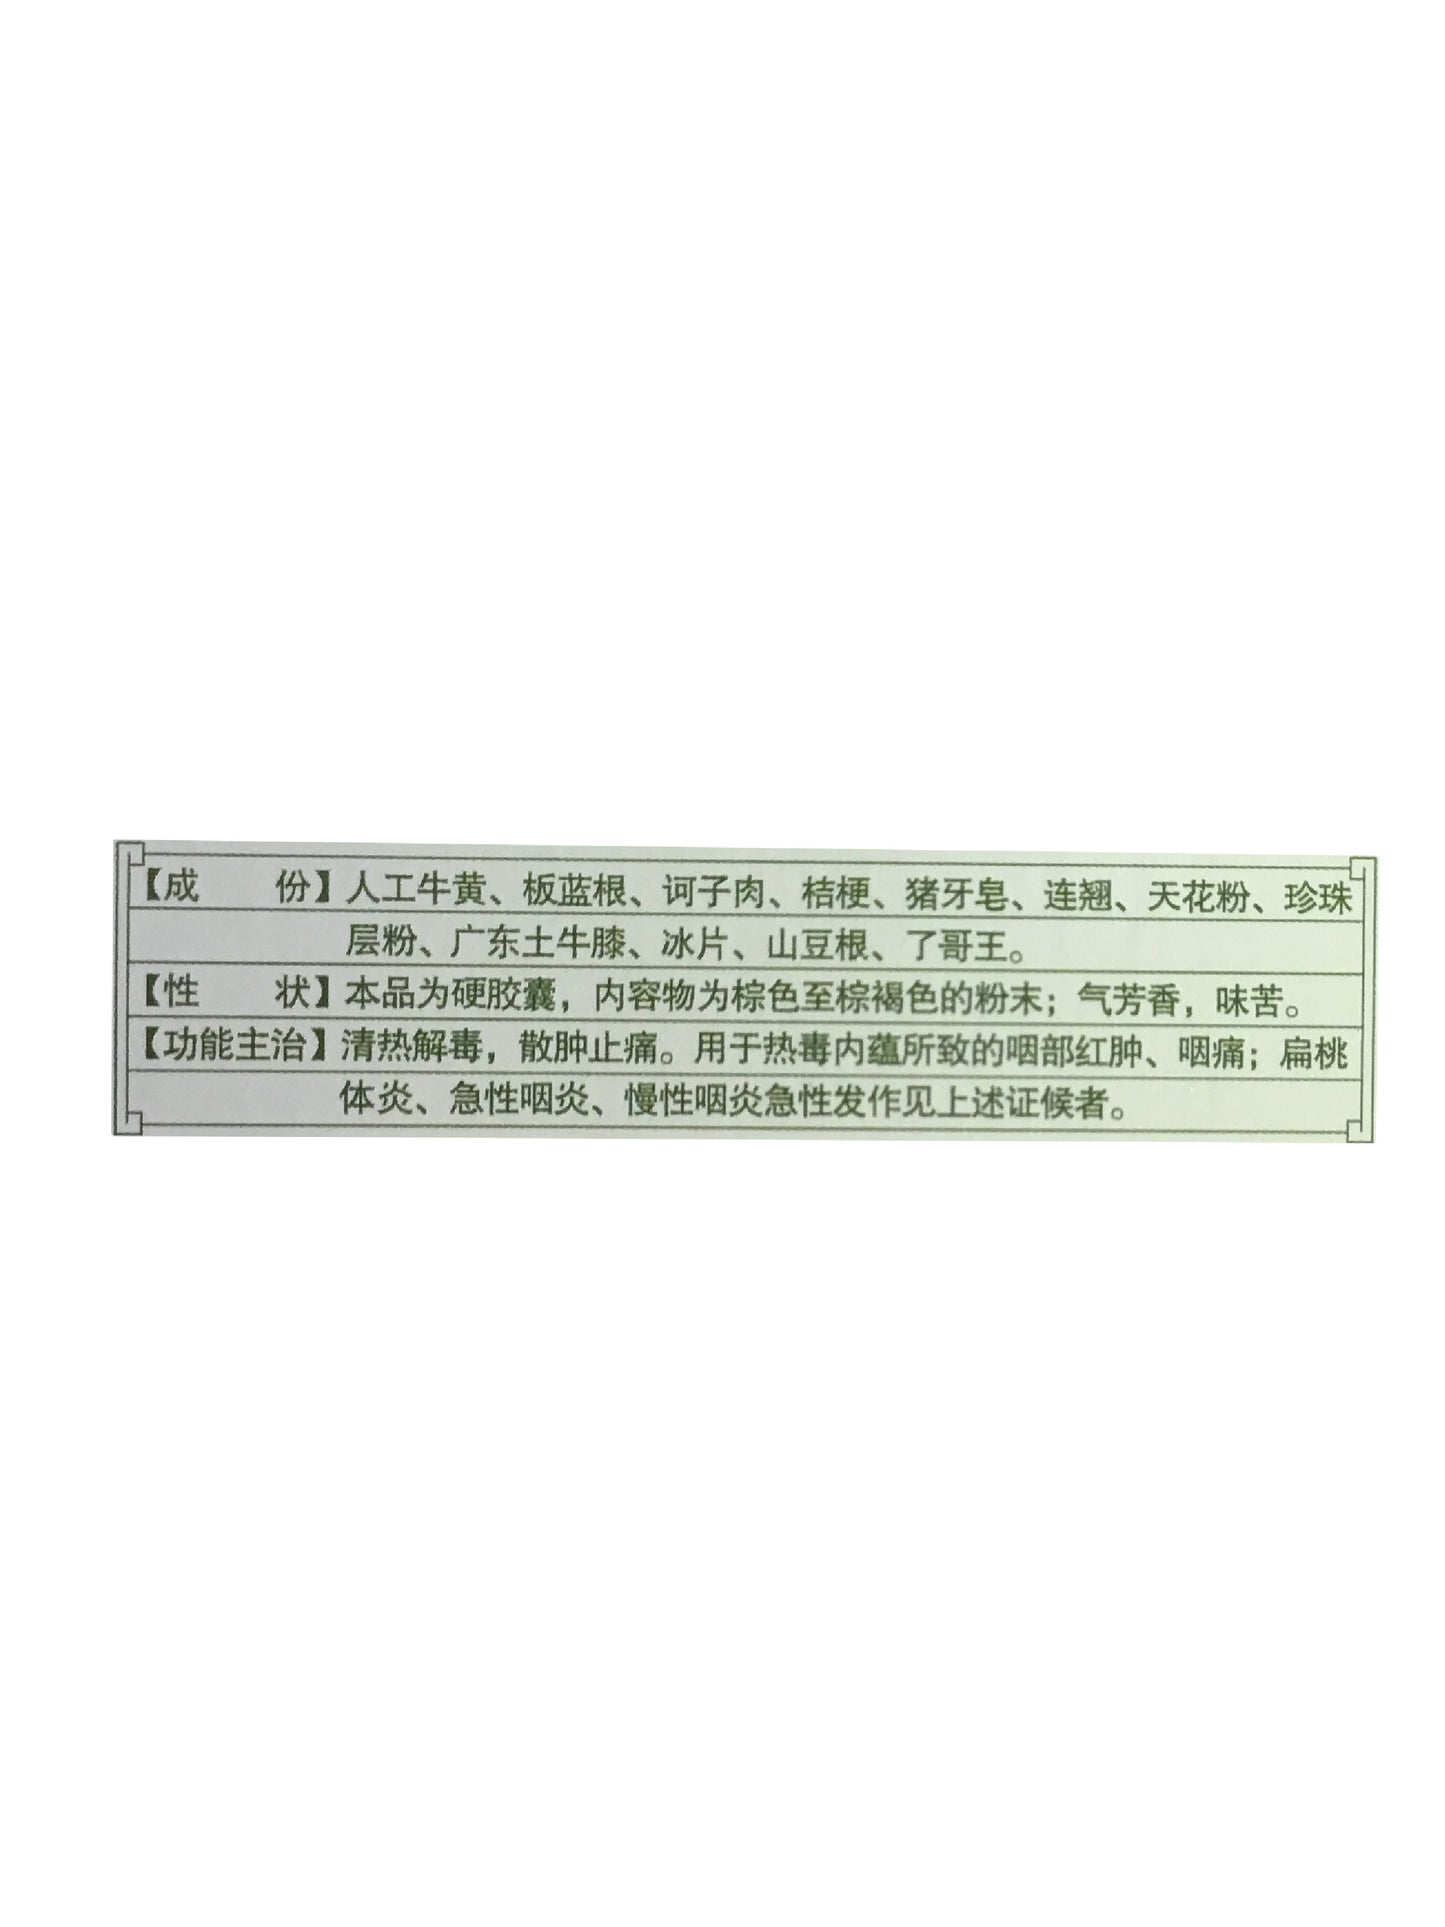 Baiyunshan Brand (Chen Liji) Hujiling Capsules 白云山 (陈李济) 睺疾灵胶囊 24粒/盒